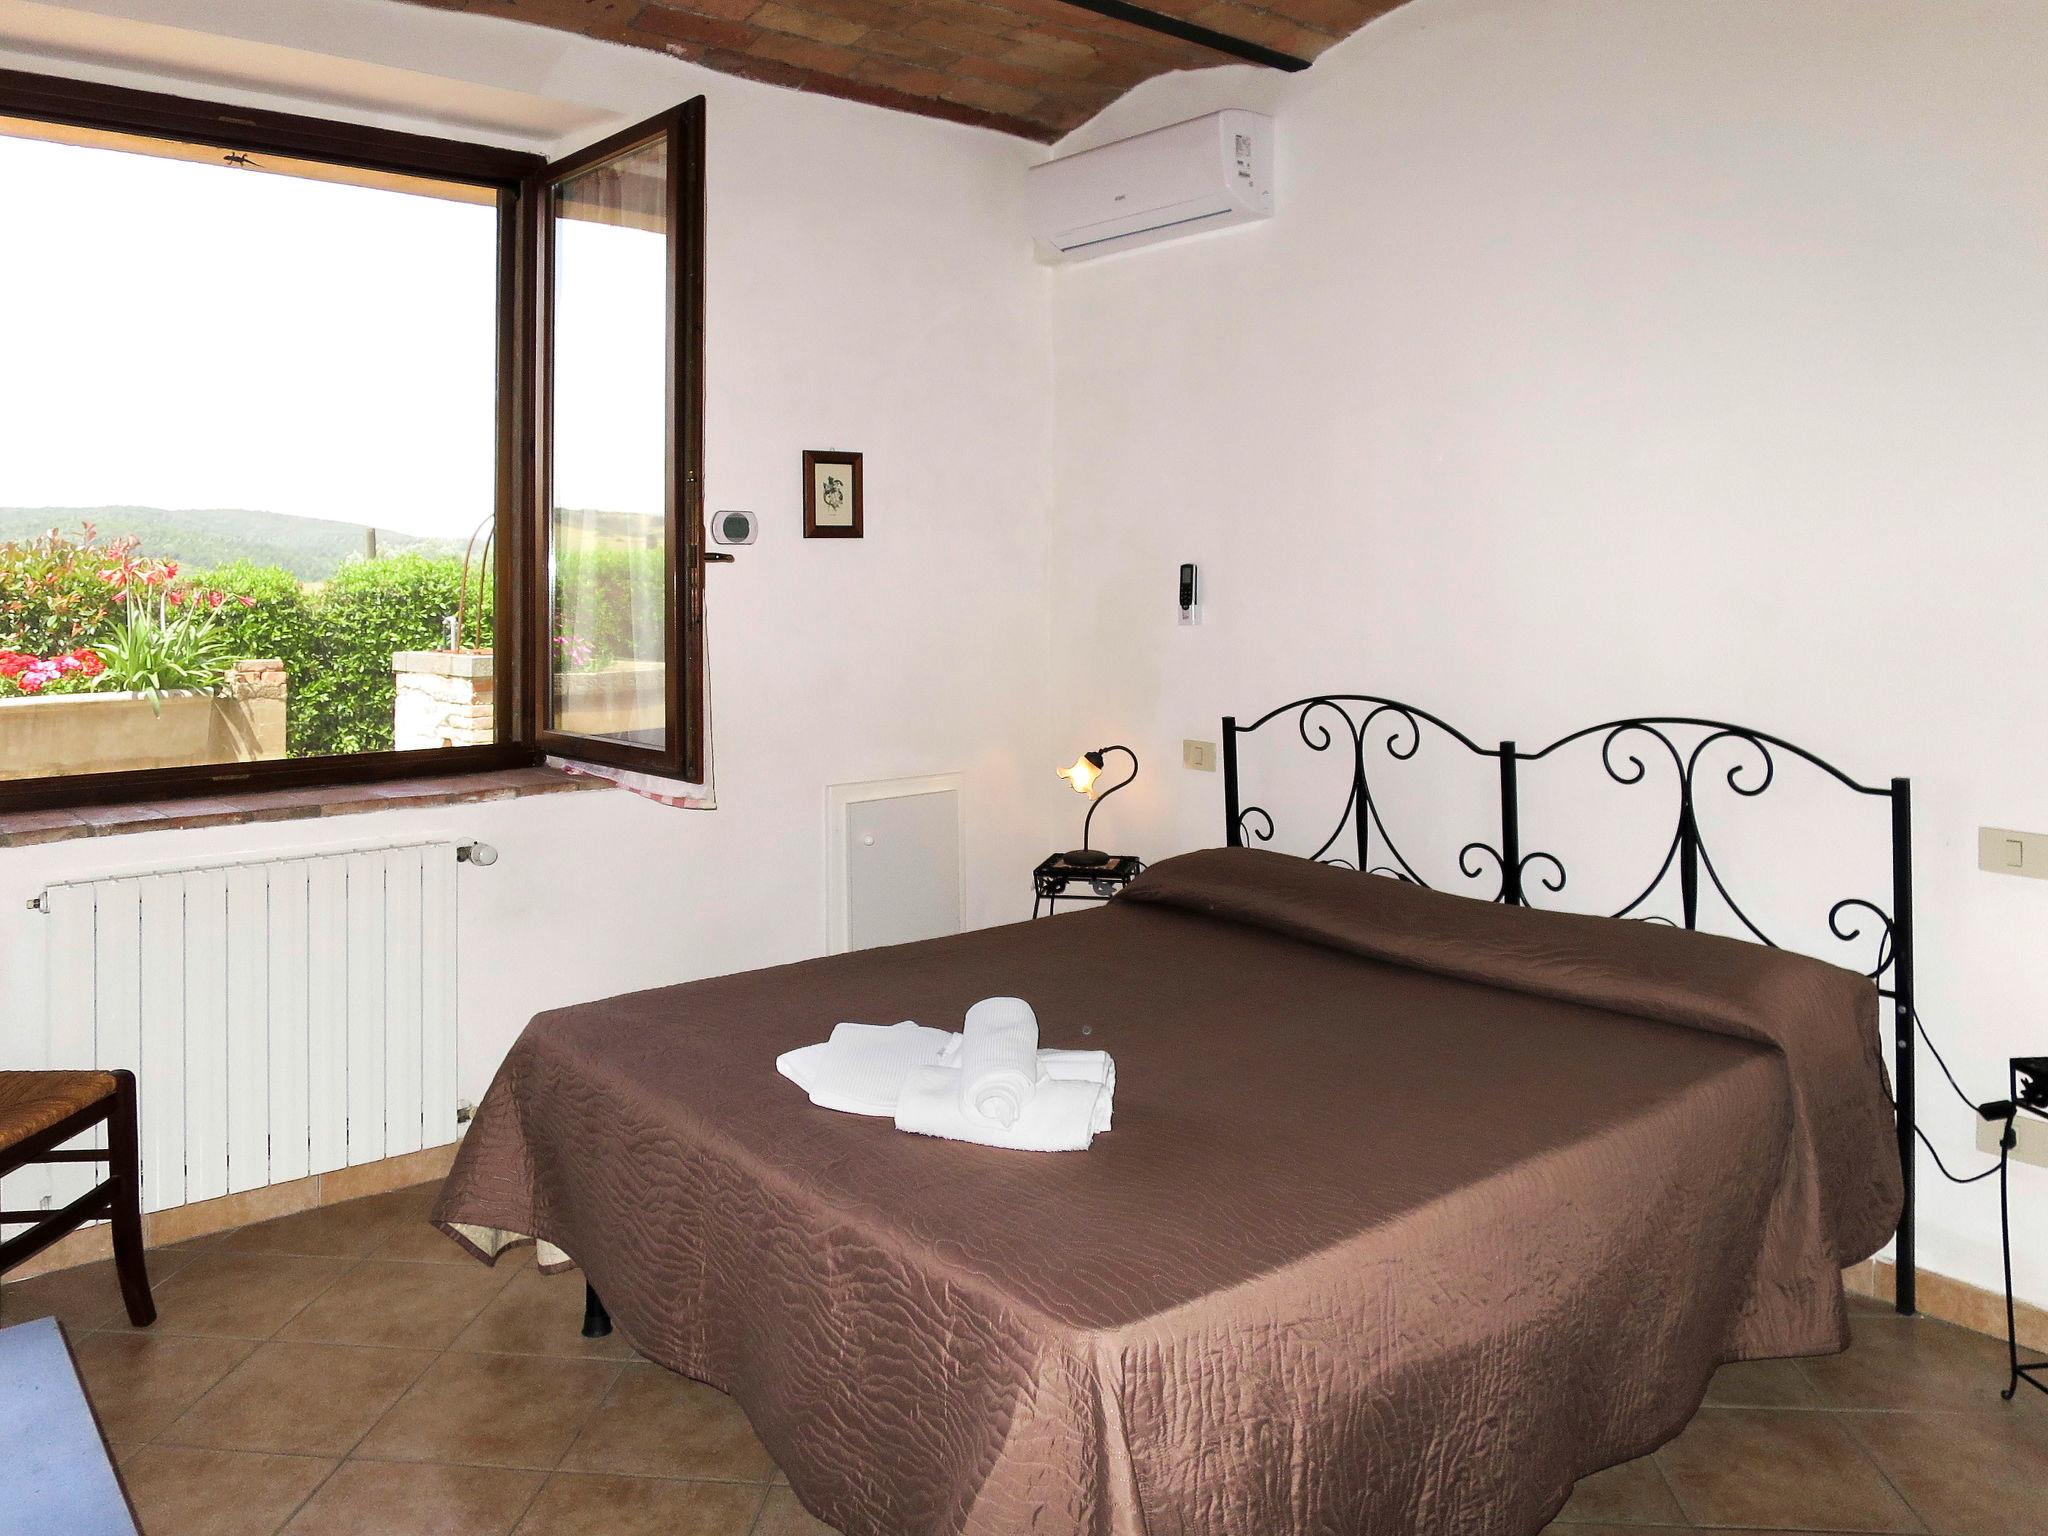 Photo 9 - Appartement de 2 chambres à Magliano in Toscana avec jardin